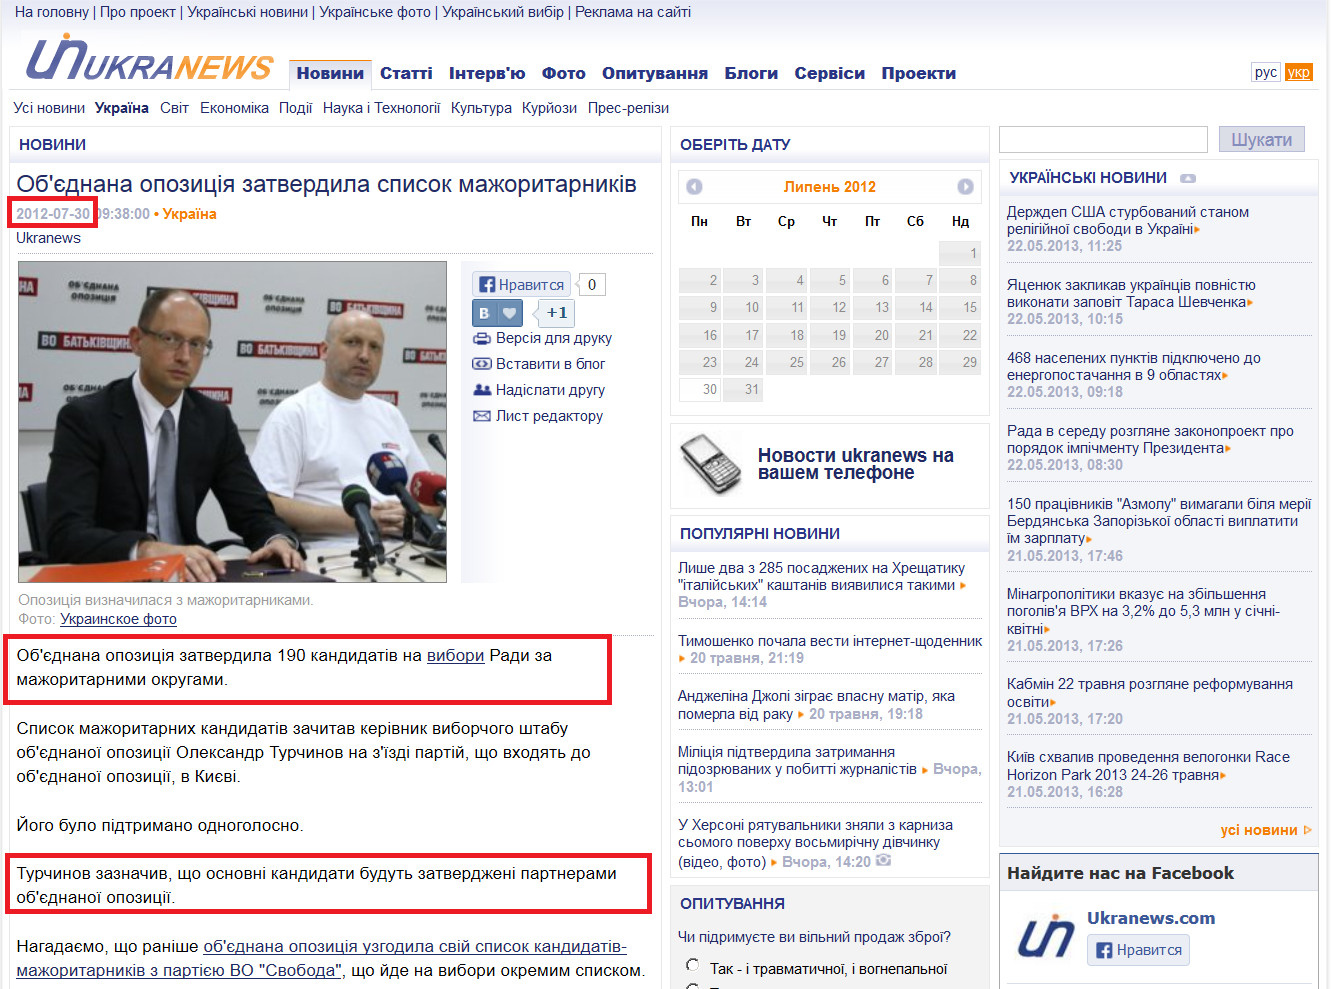 http://ukranews.com/uk/news/ukraine/2012/07/30/75745